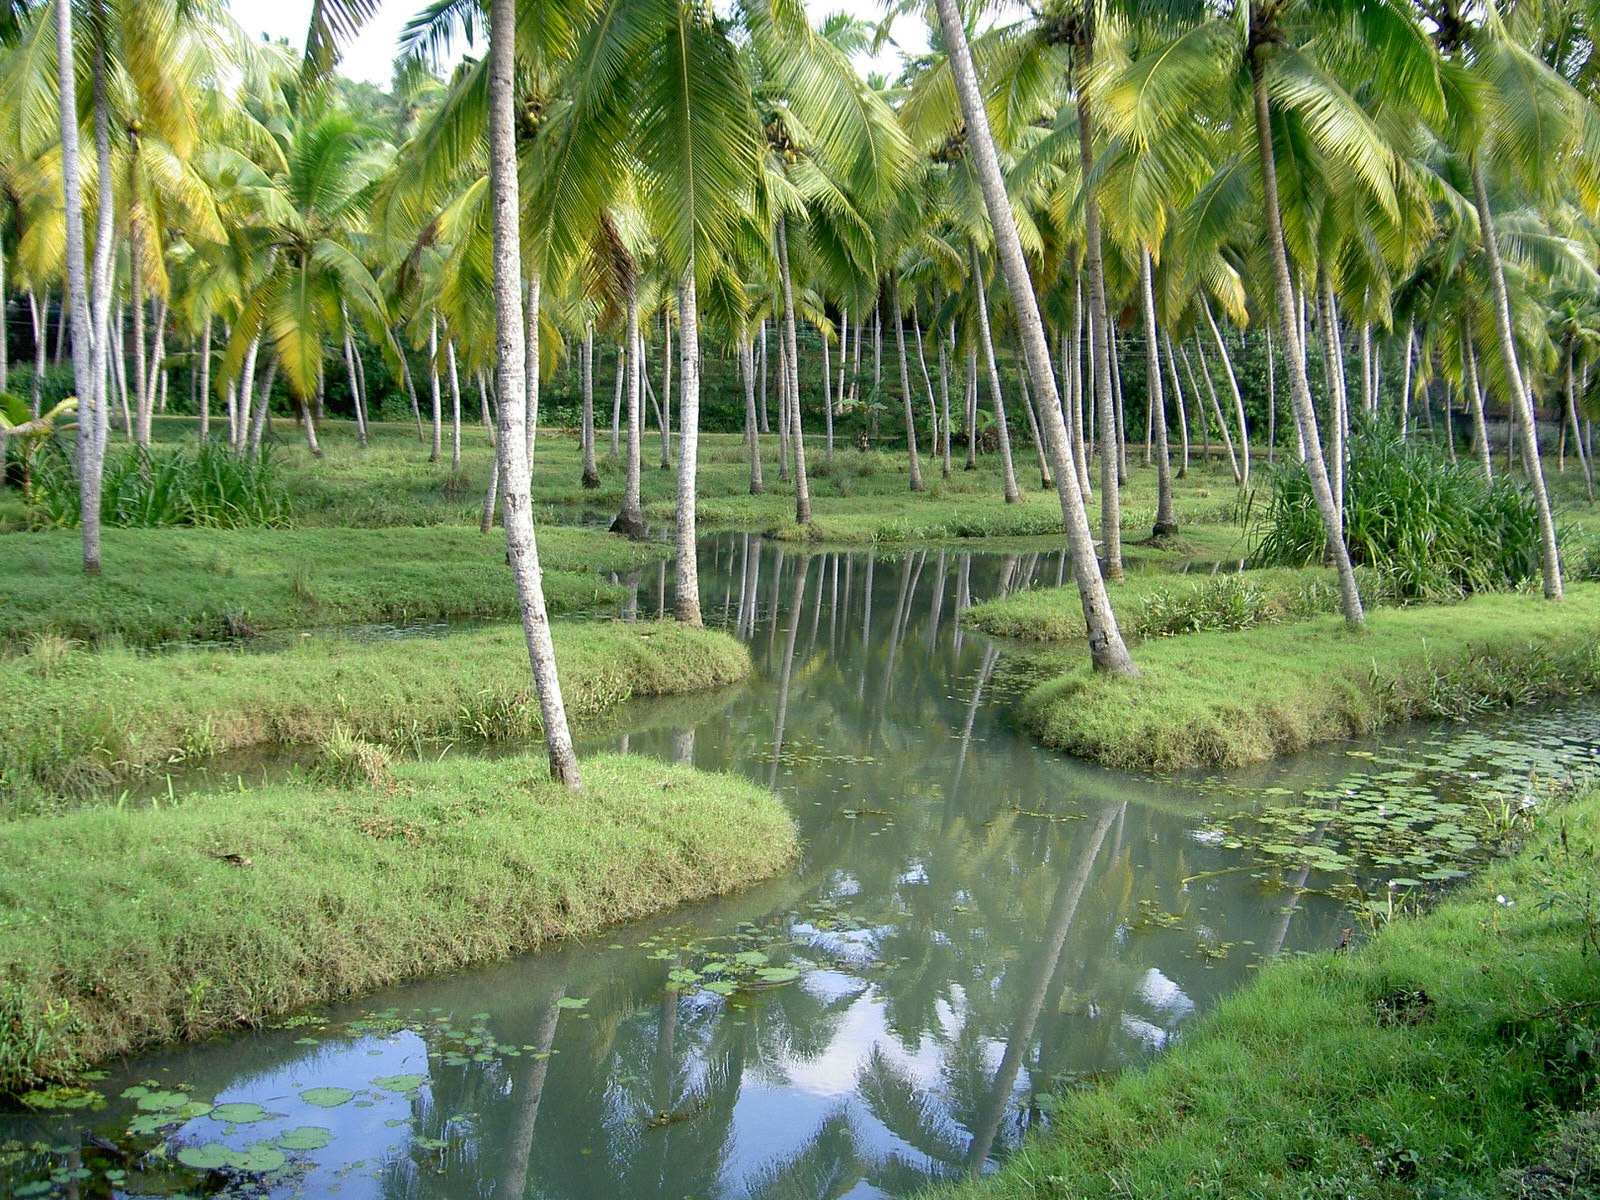 Kerala’s backwaters © Andreas Polz / Shutterstock